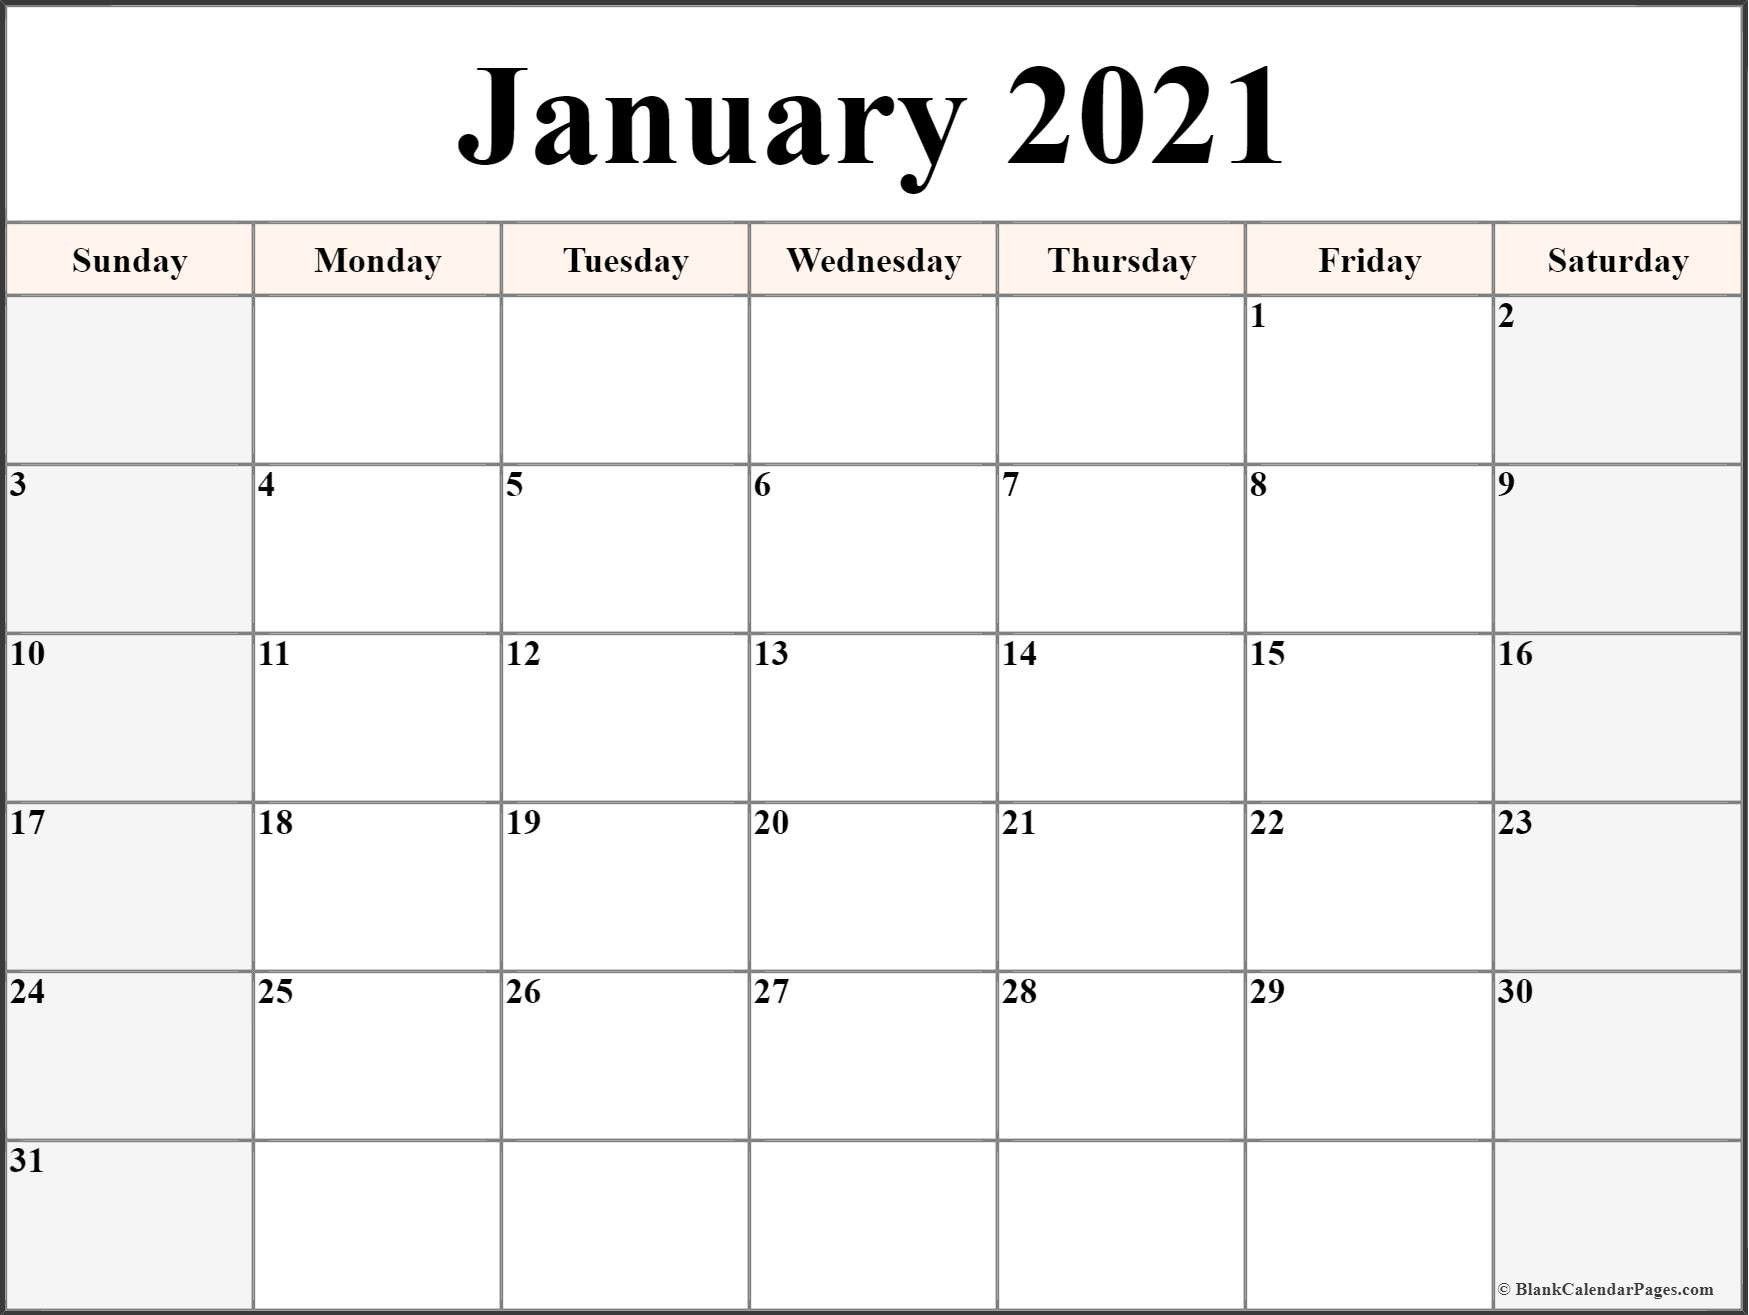 January 2021 Calendar | Free Printable Calendar Templates-January 2021 Calendar Printable Free Monthly